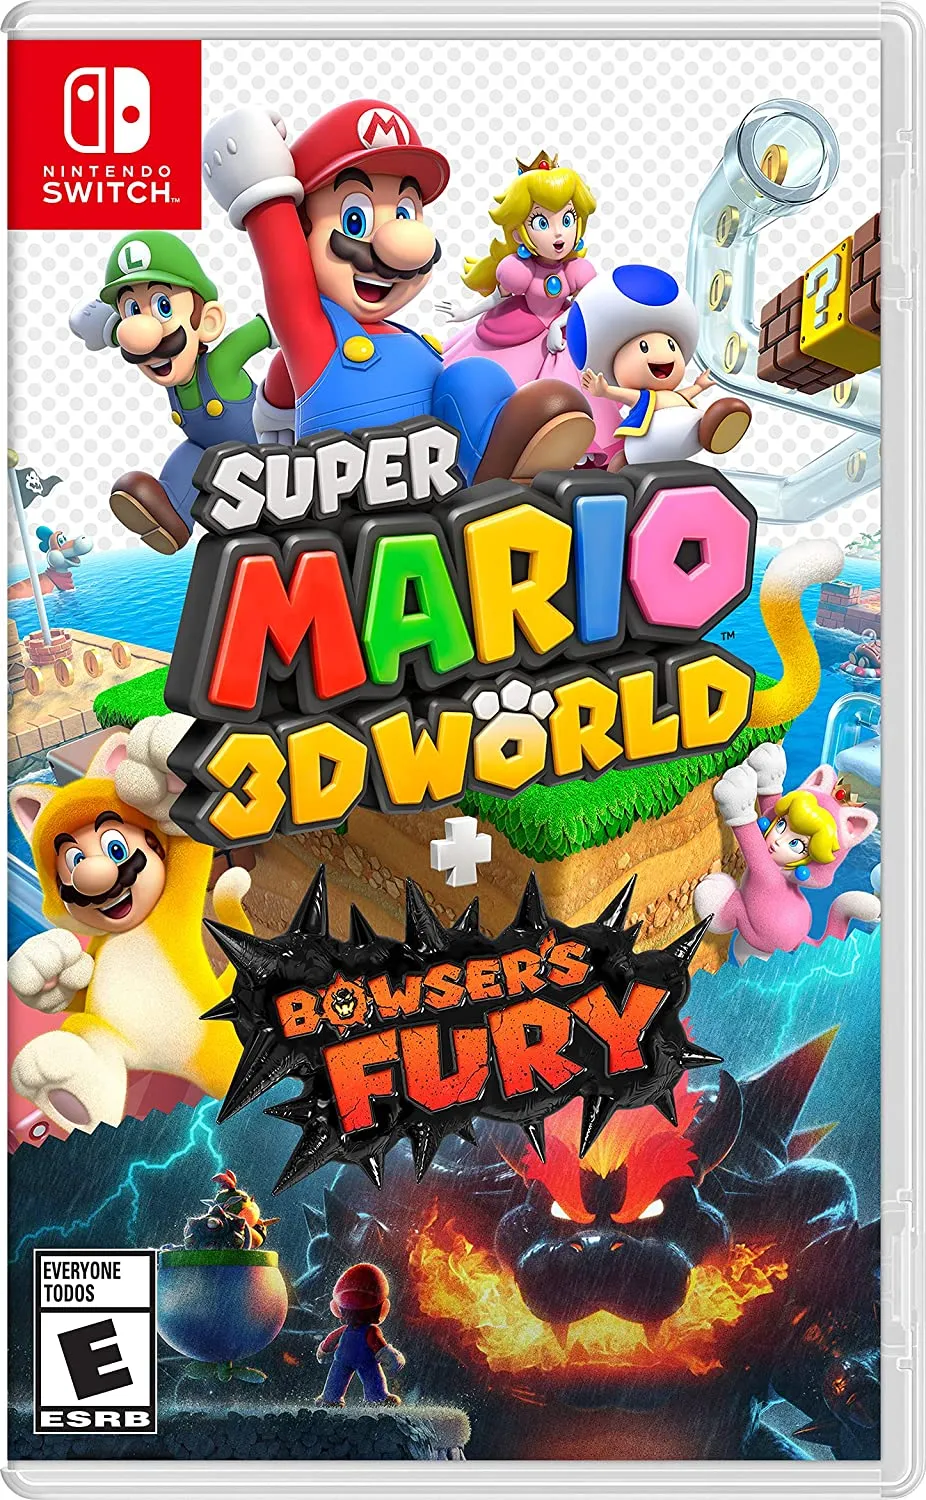 Super Mario 3D World + Bowser's Fury kaanekujundus Nintendo Switchile.